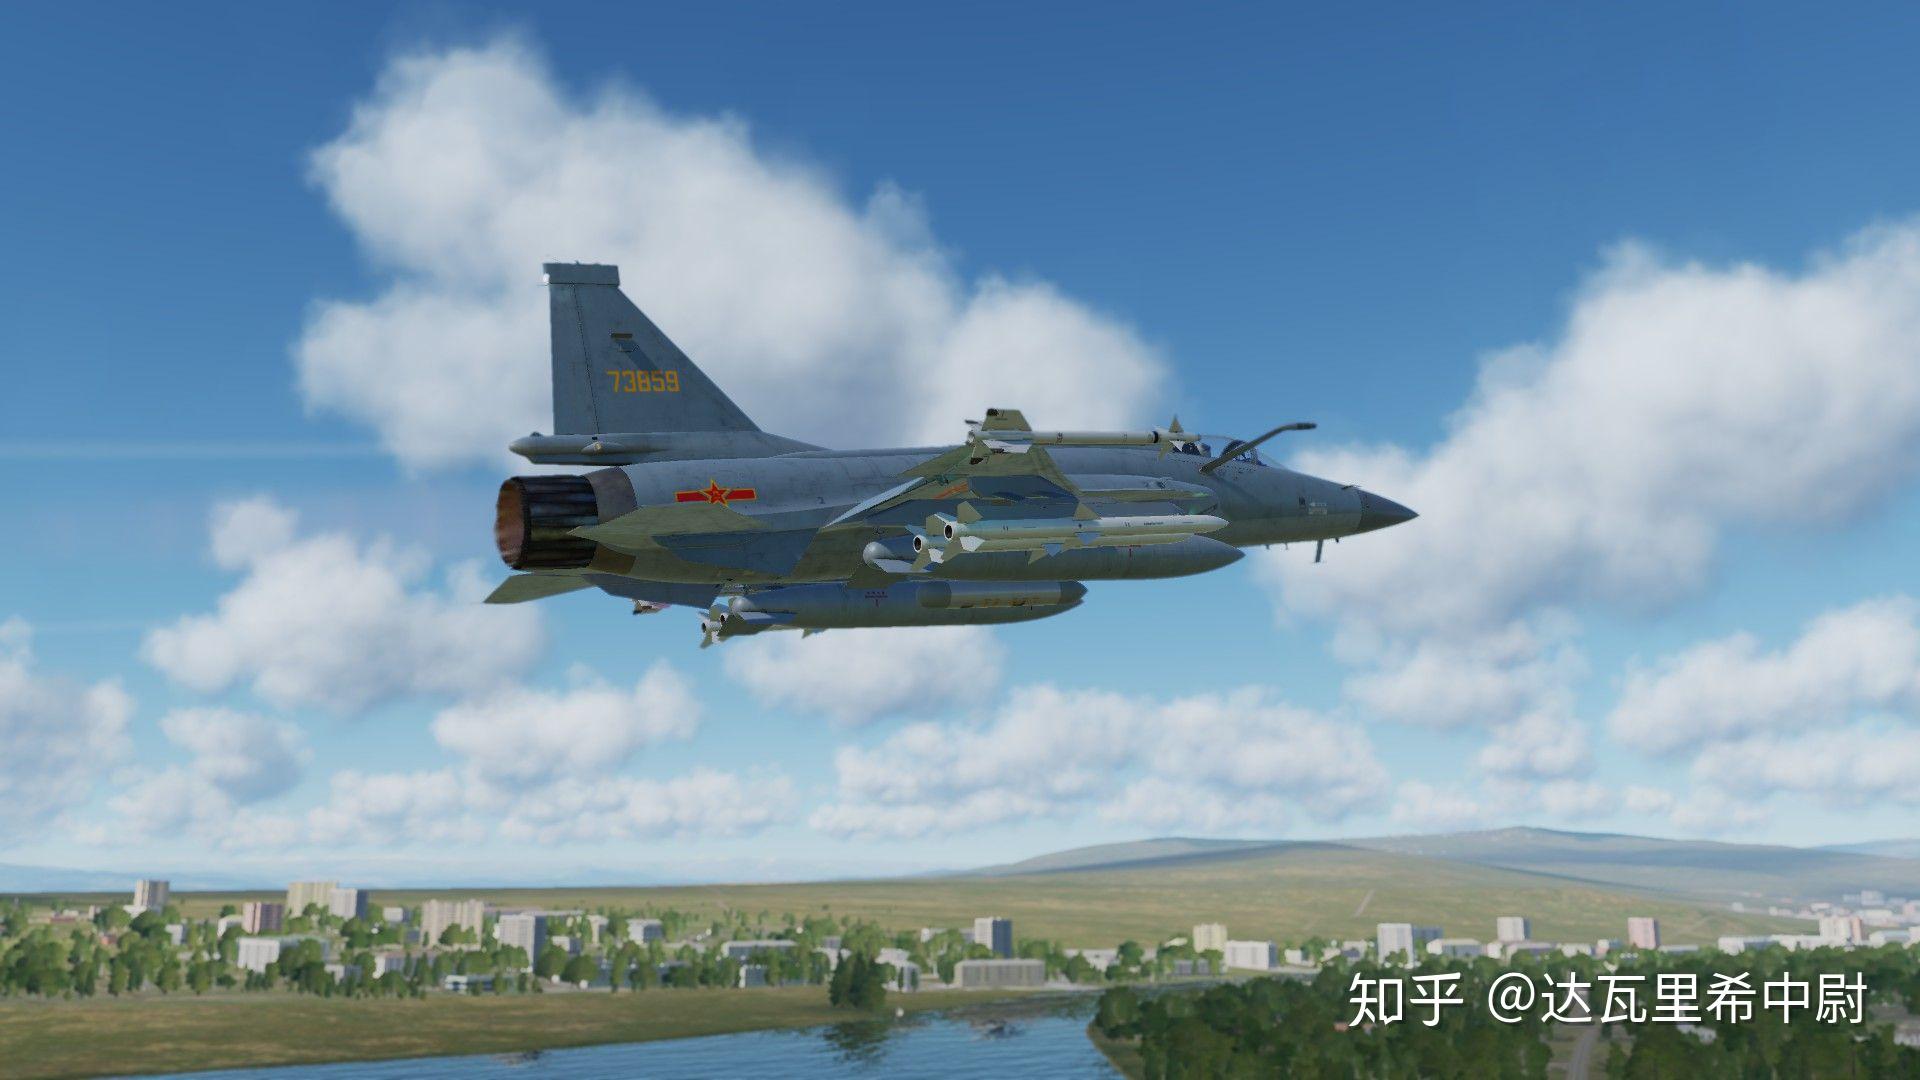 SA 342L Gazelle - People's Liberation Army Air Force | DefenceTalk Forum